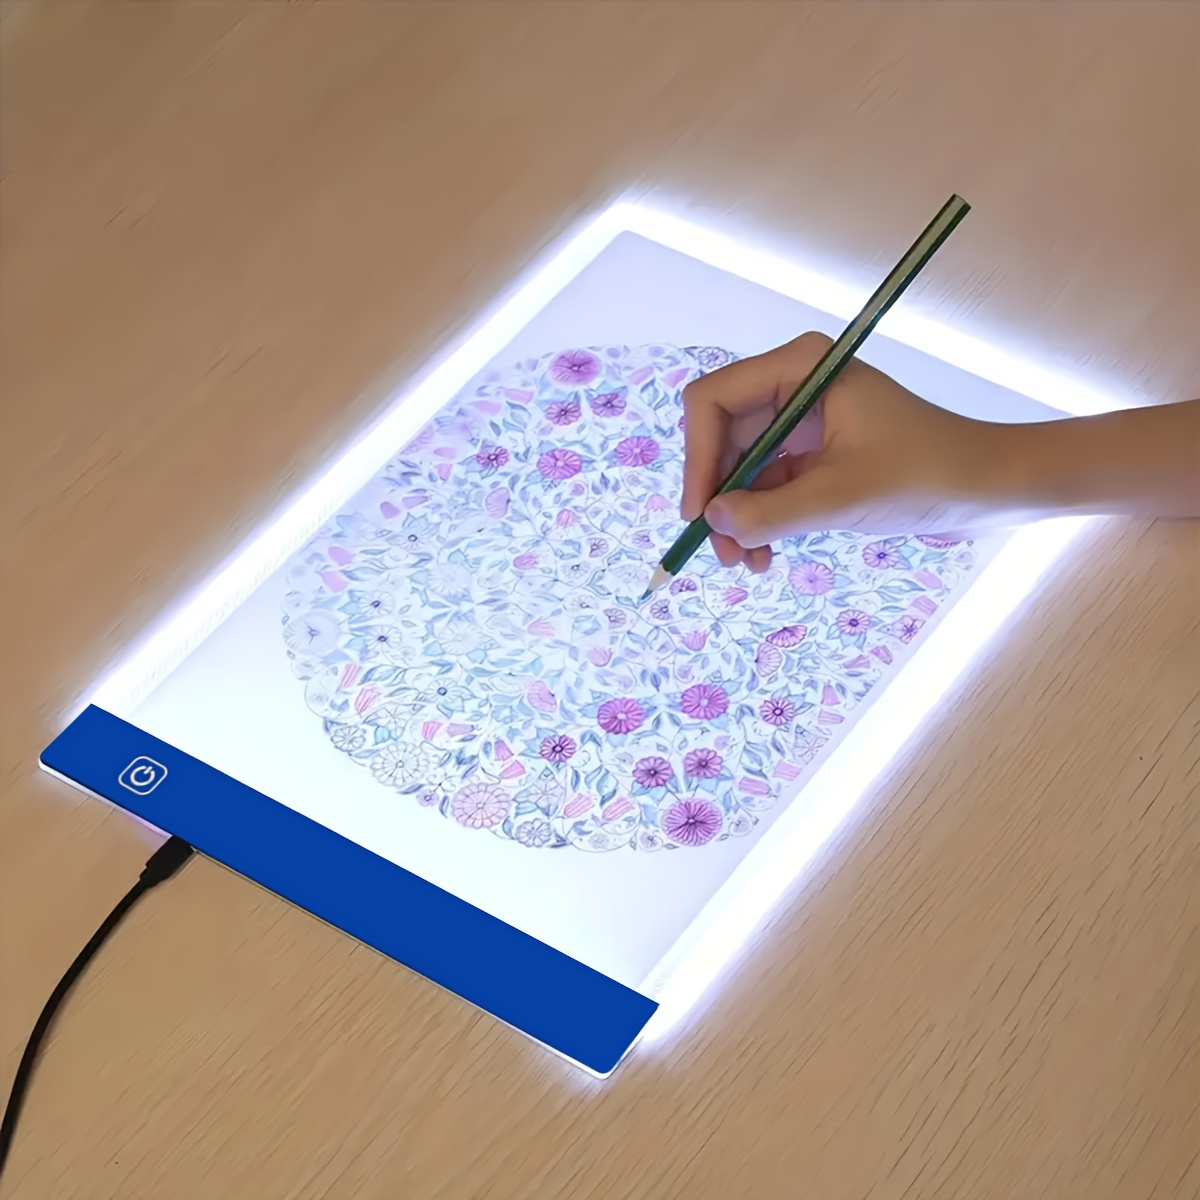 comzler Light Board, A4 Tracing Light Box, Magnetic Light Pad, Light Table  for Tracing, LED Light Drawing Board, Sketch Pad LED Light Drawing Pad,  Cricut Light Pad, Dimmable Brightness 